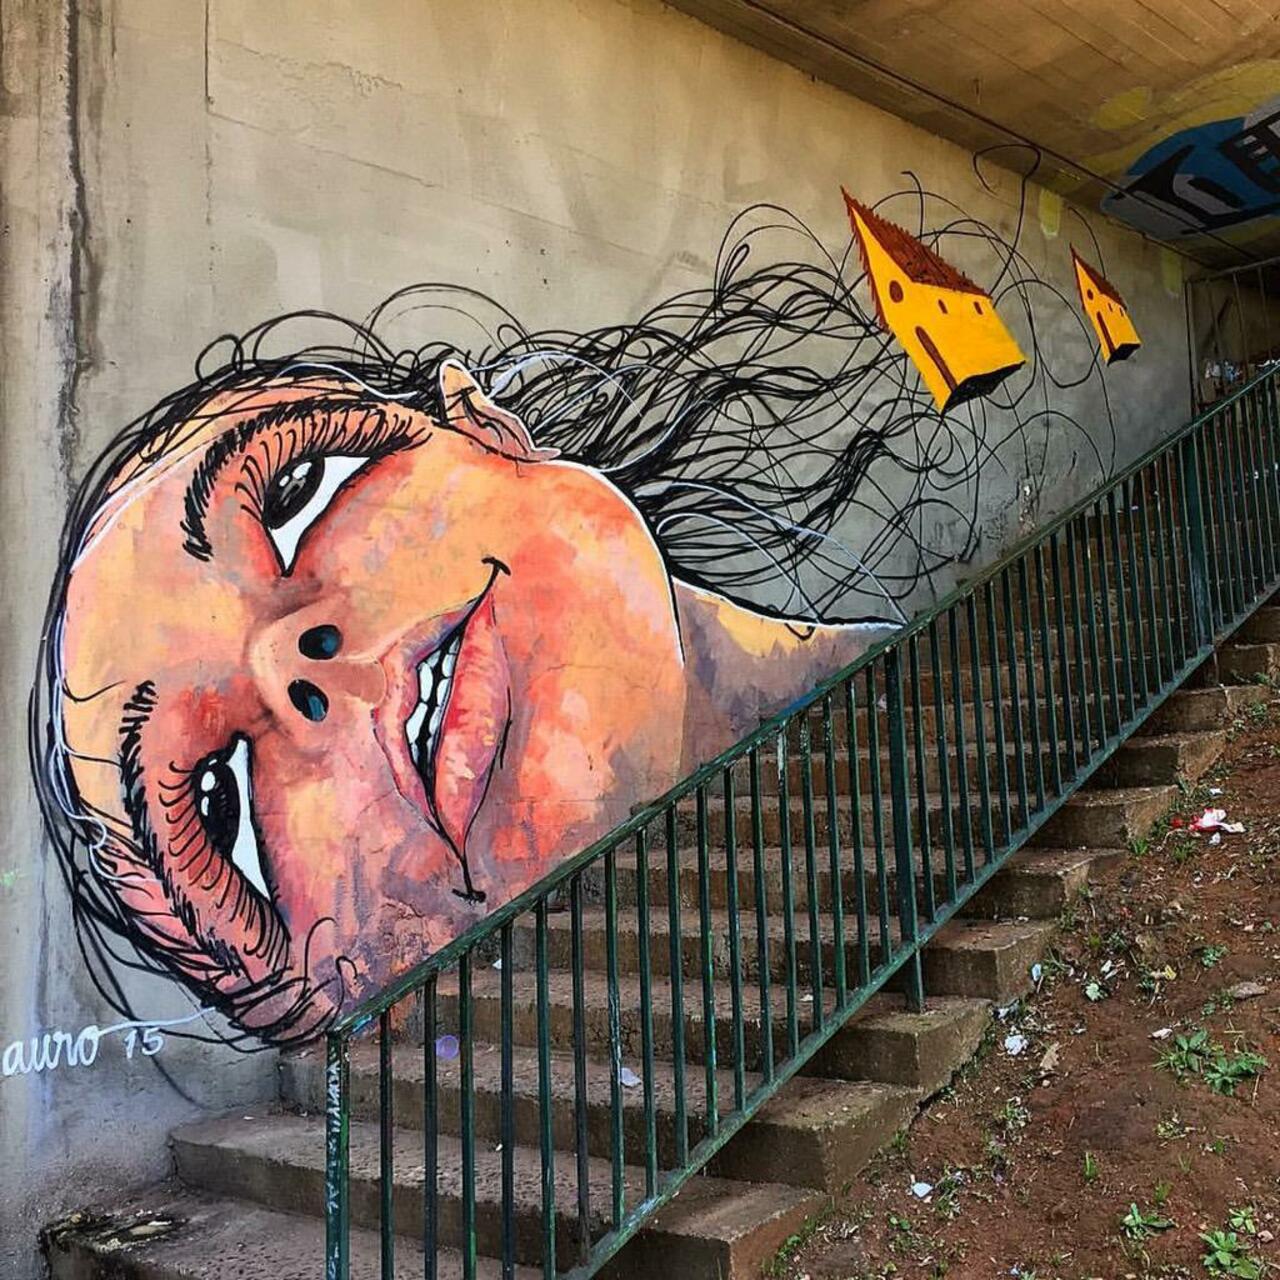 Street Art by Reveracidade in São Paulo 

#art #graffiti #mural #streetart http://t.co/d4R3MYxvlu